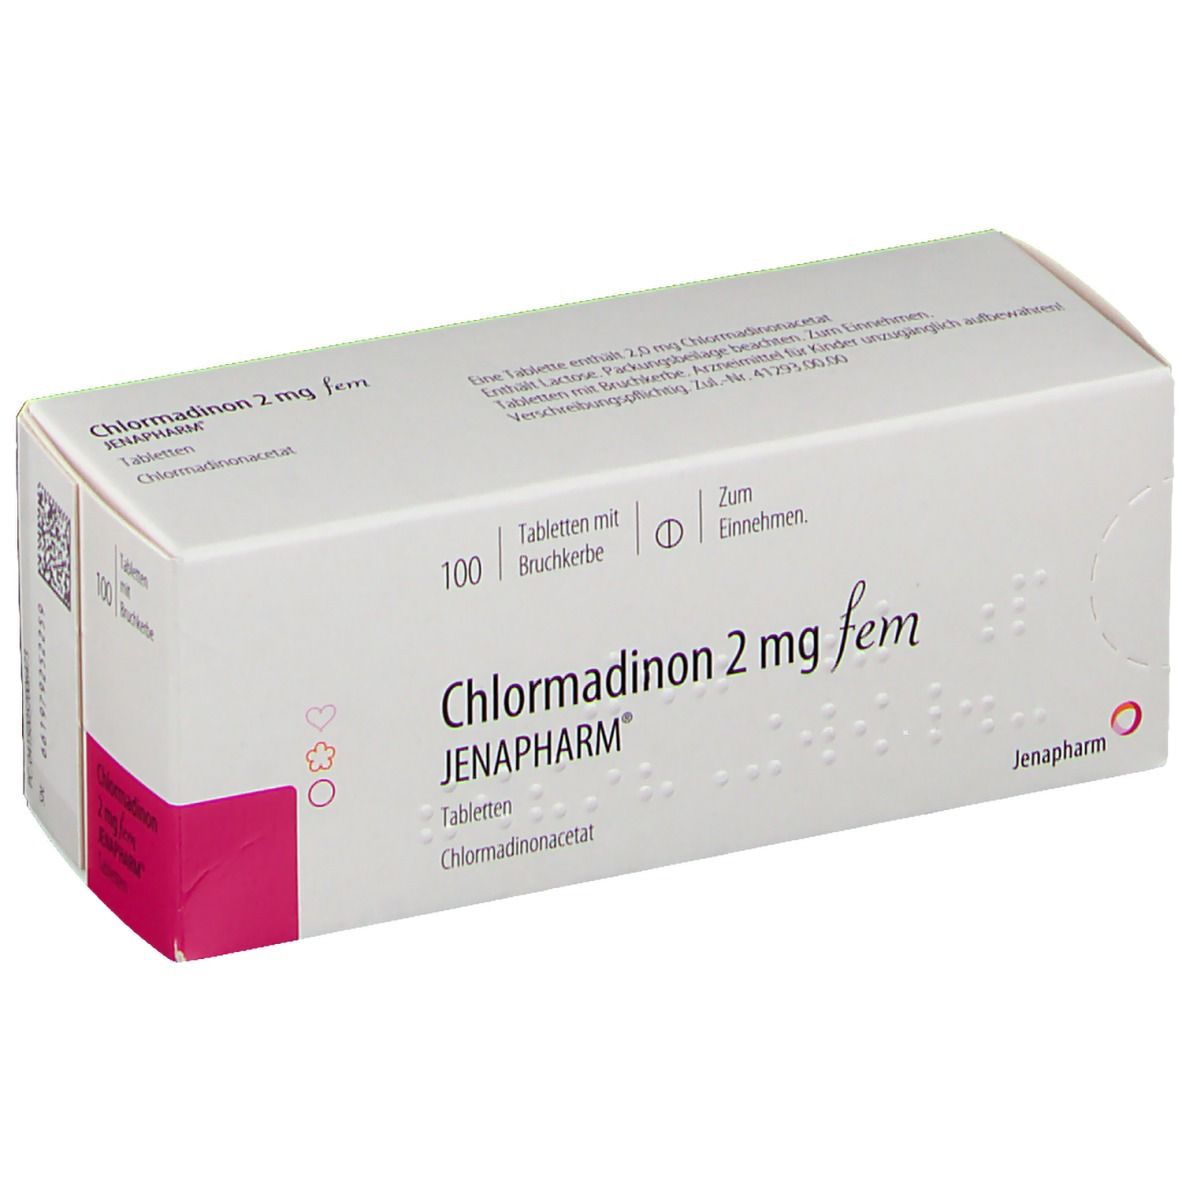 Chlormadinon 2 mg fem JENAPHARM®